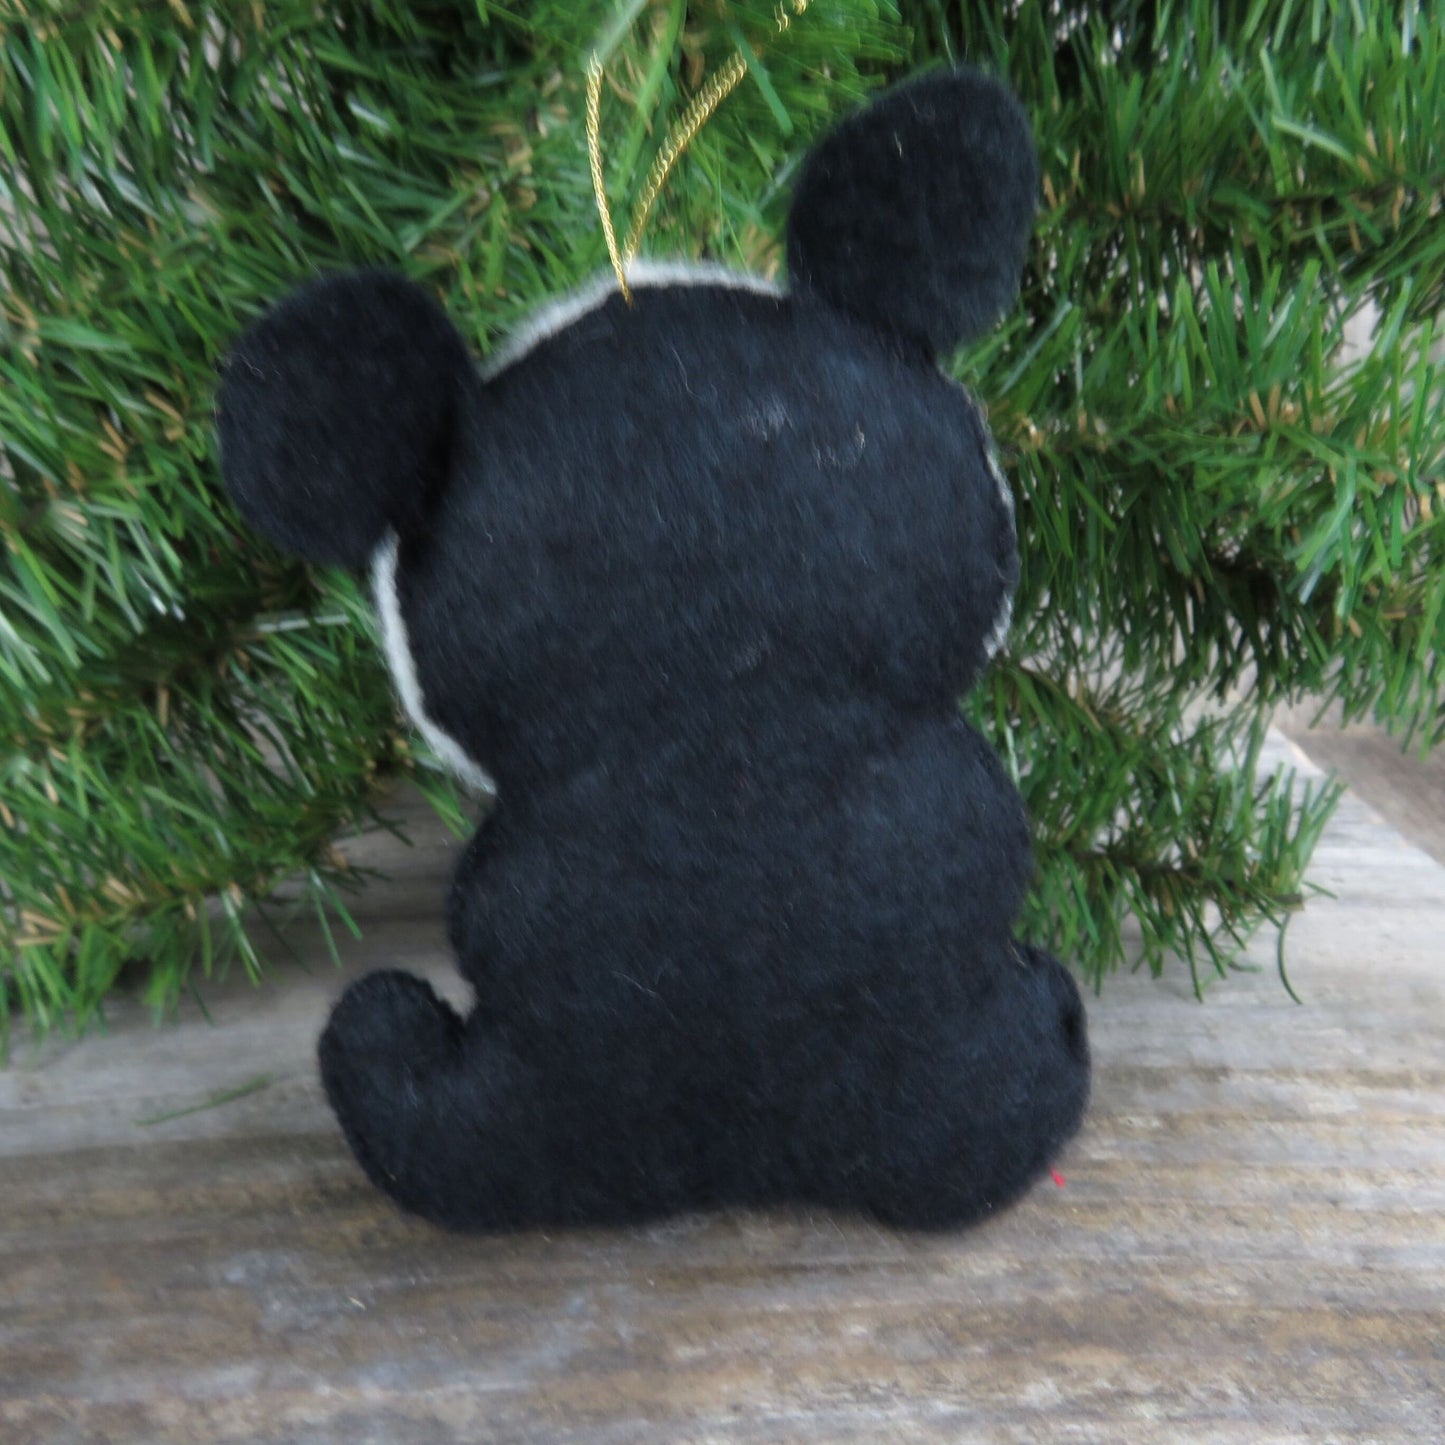 Vintage Panda Bear Plush Ornament Christmas Googly Eyes Felt Black and White Stuffed Animal